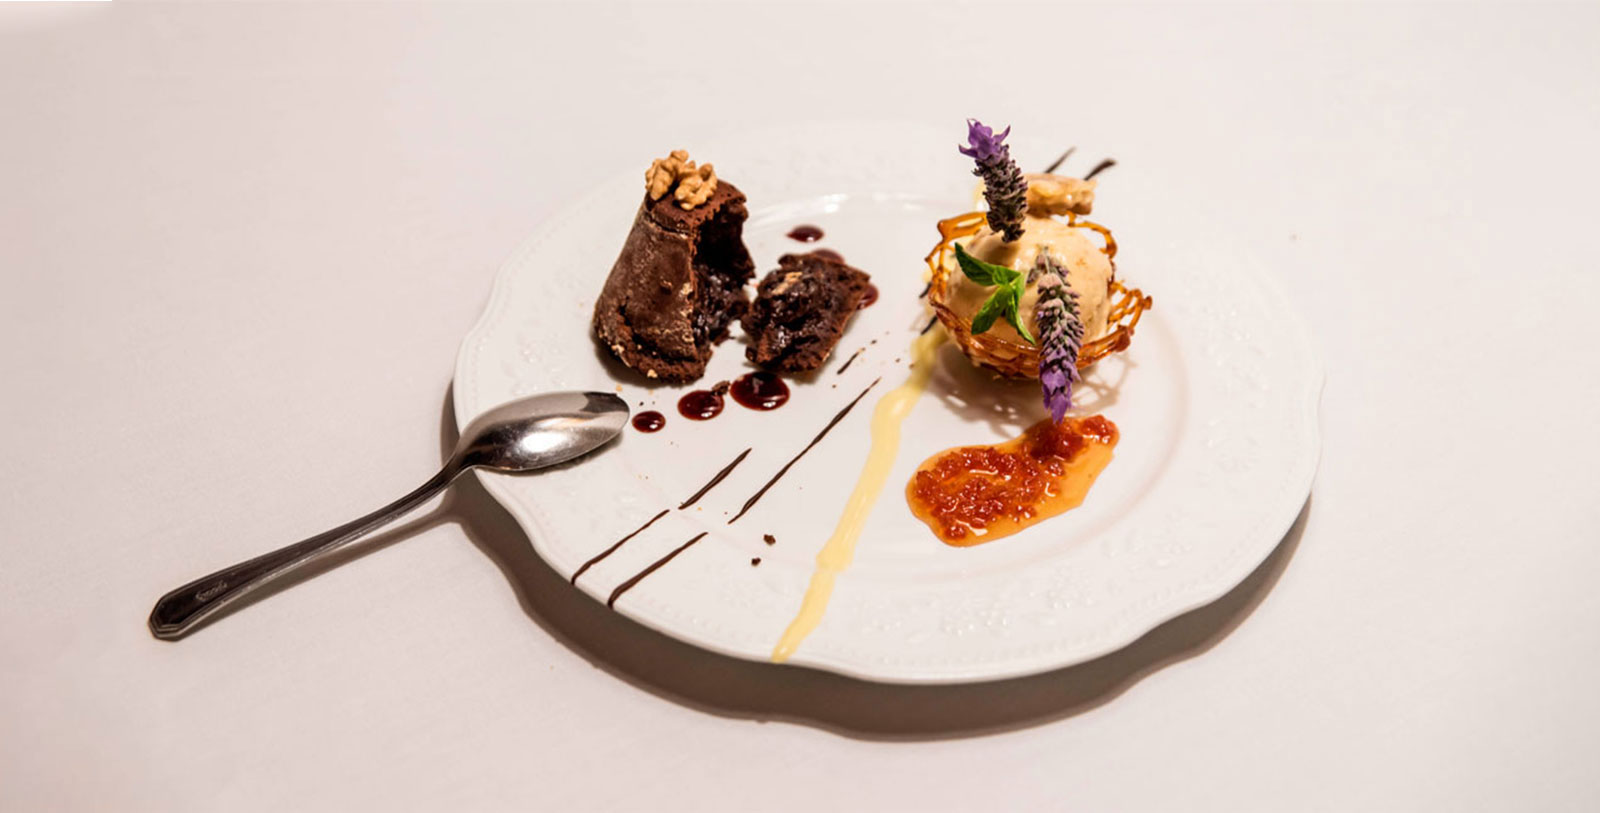 Taste the garden-grown gastronomy at La Rosa, the hotel's signature restaurant.